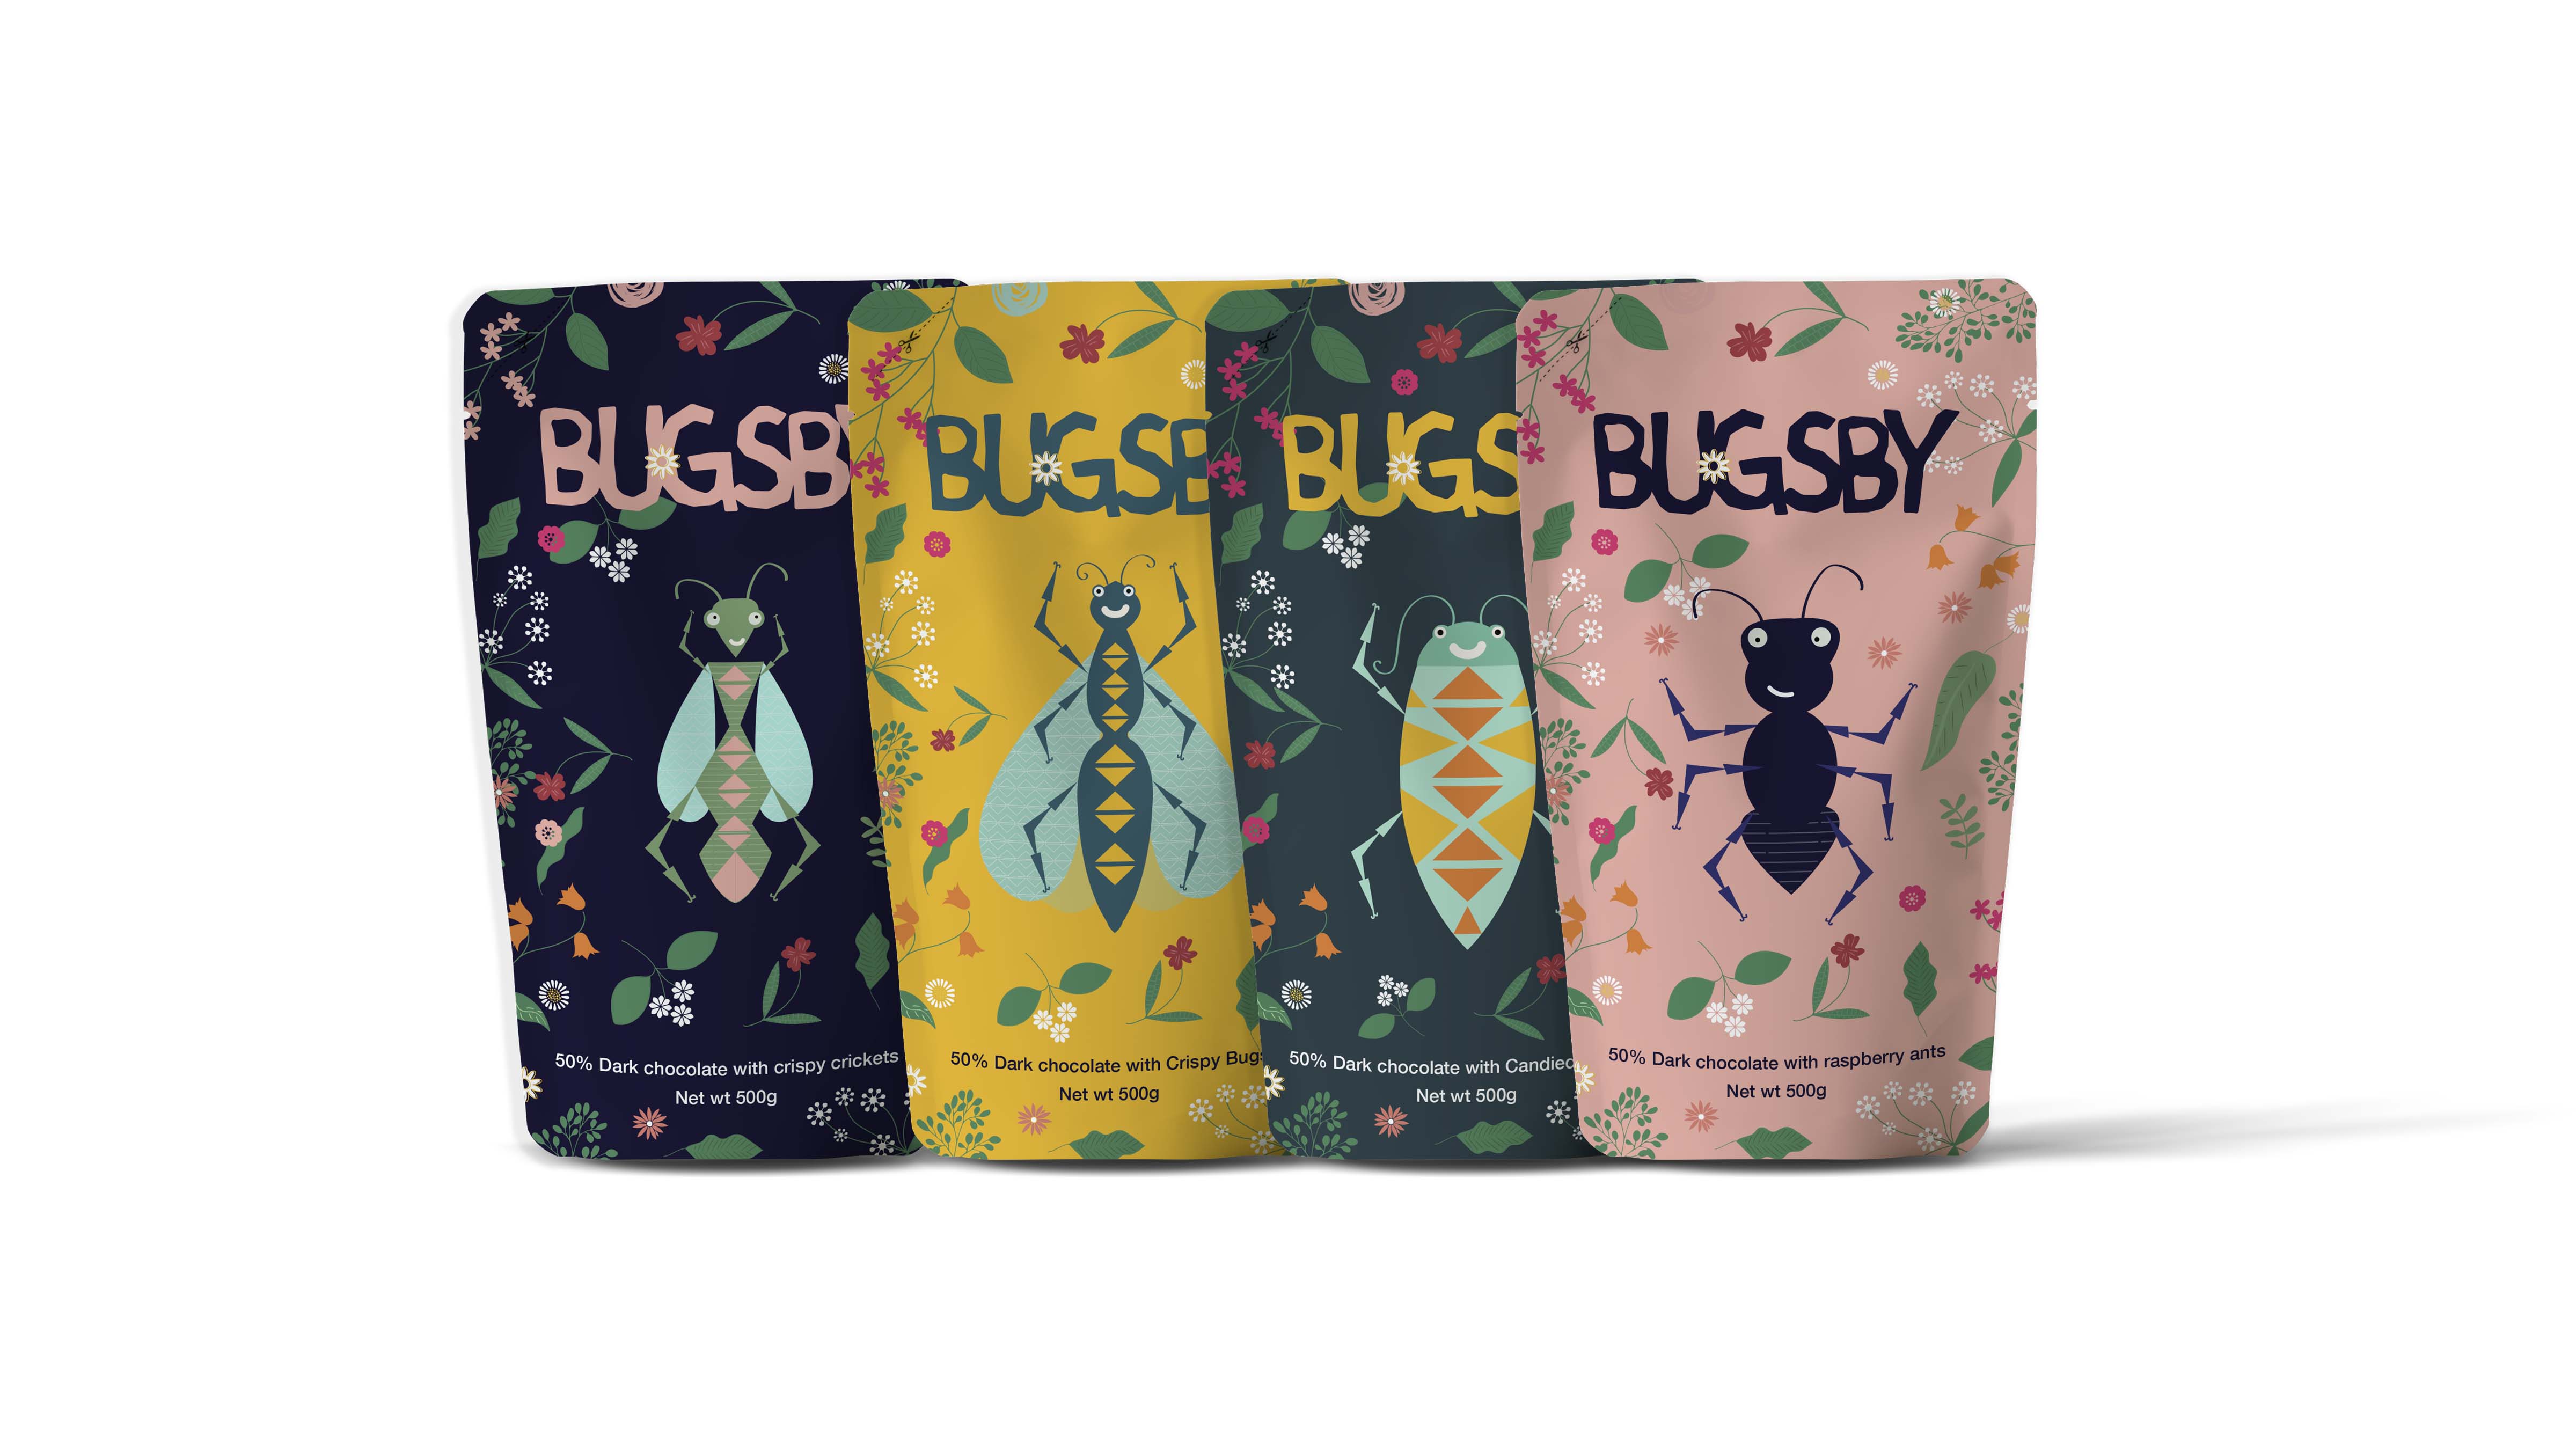 Bugsby Entomophagy Chocolate Packaging Design by Nandita Menon